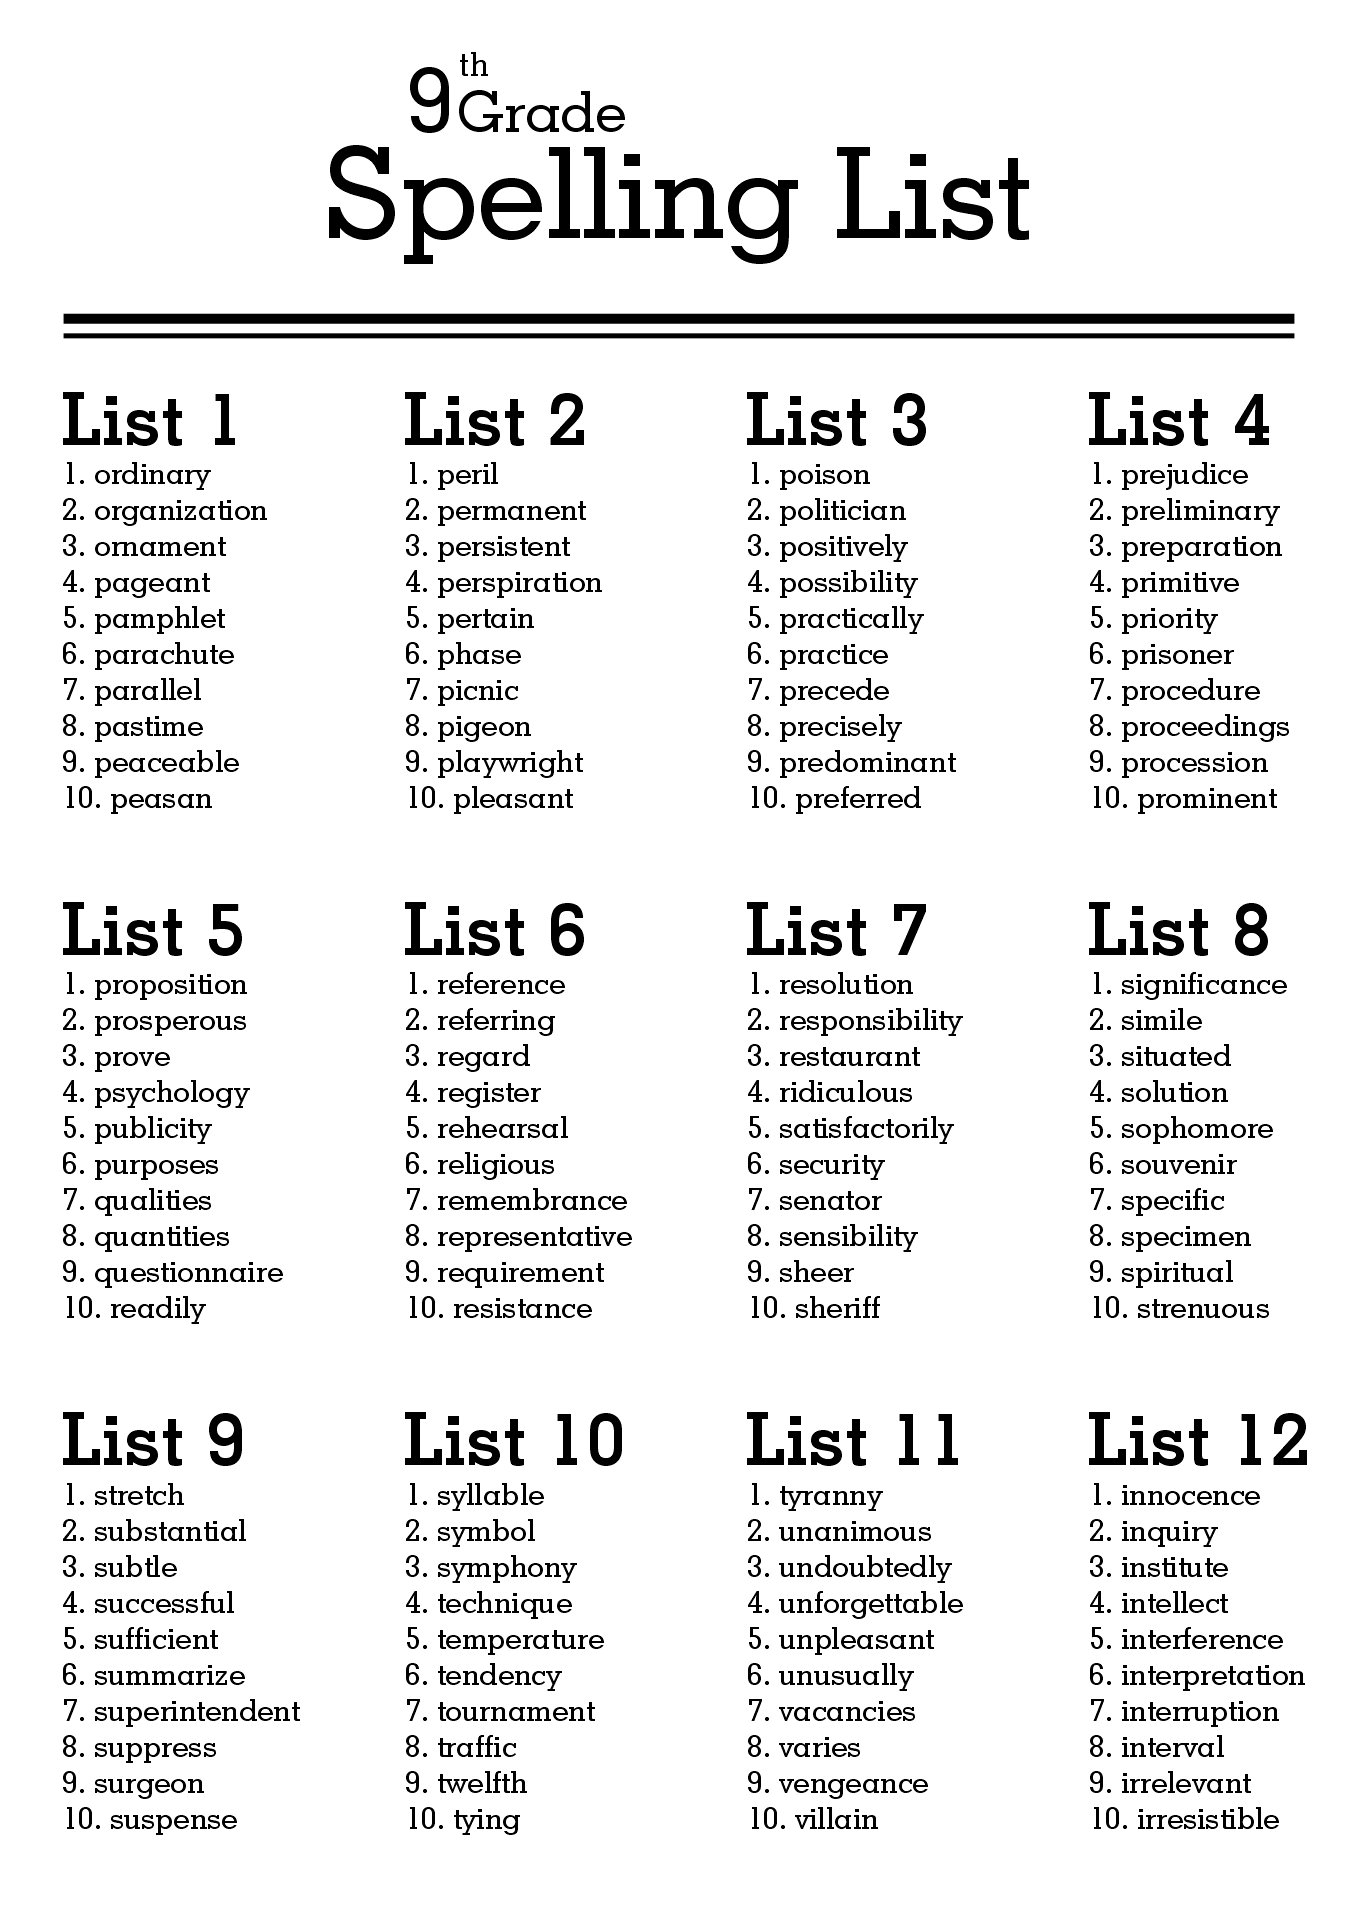 17-best-images-of-9th-grade-worksheets-spelling-words-9th-grade-spelling-words-worksheets